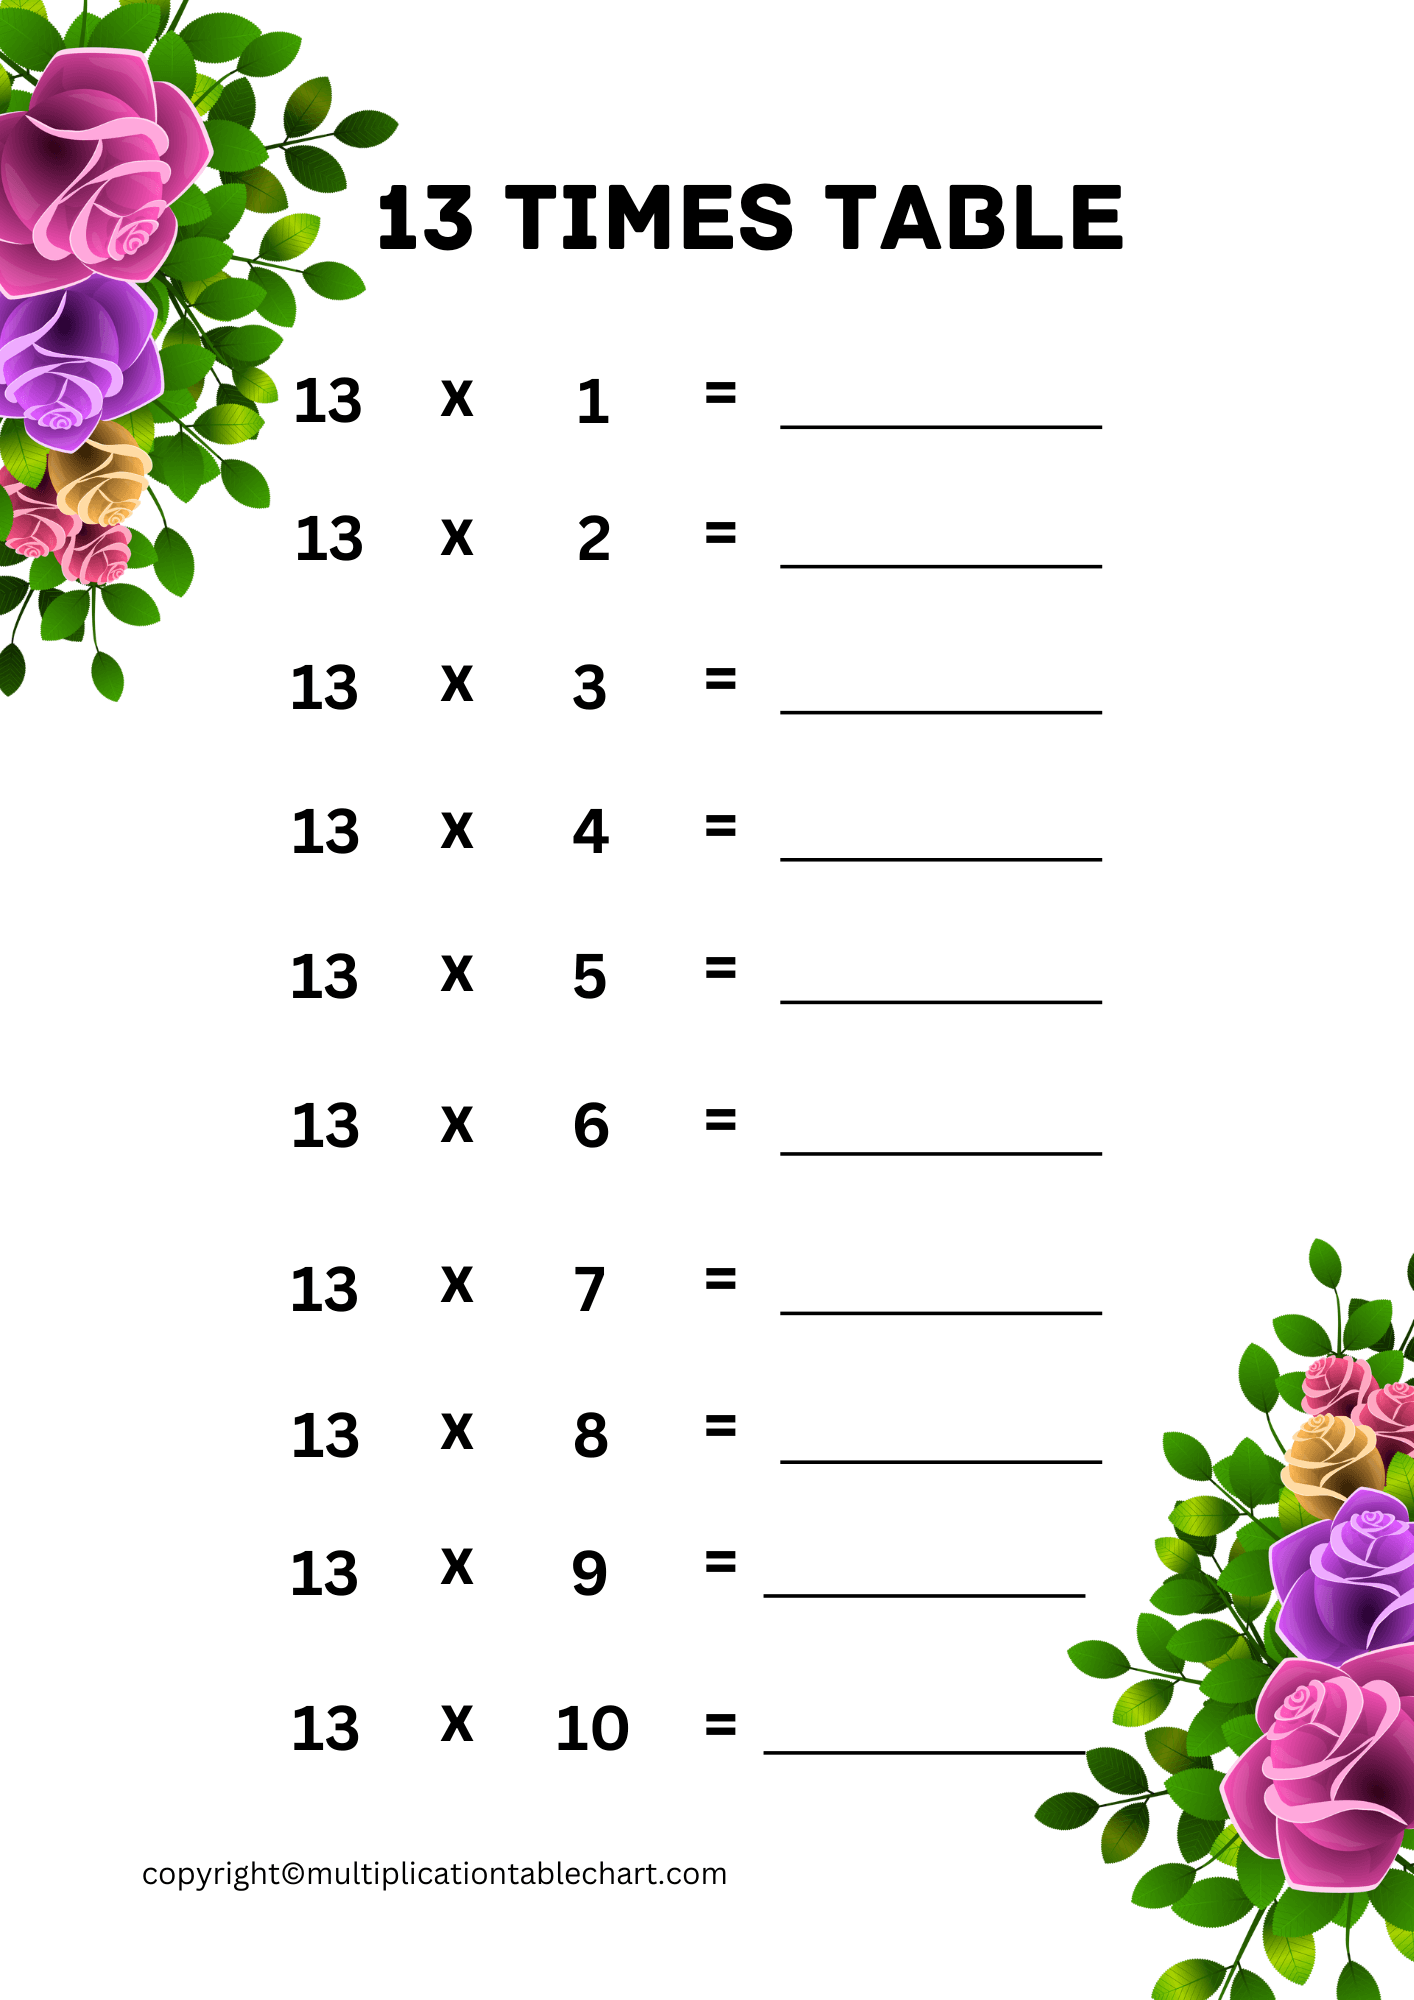 13 Times Table Worksheet Multiplication Table 7919